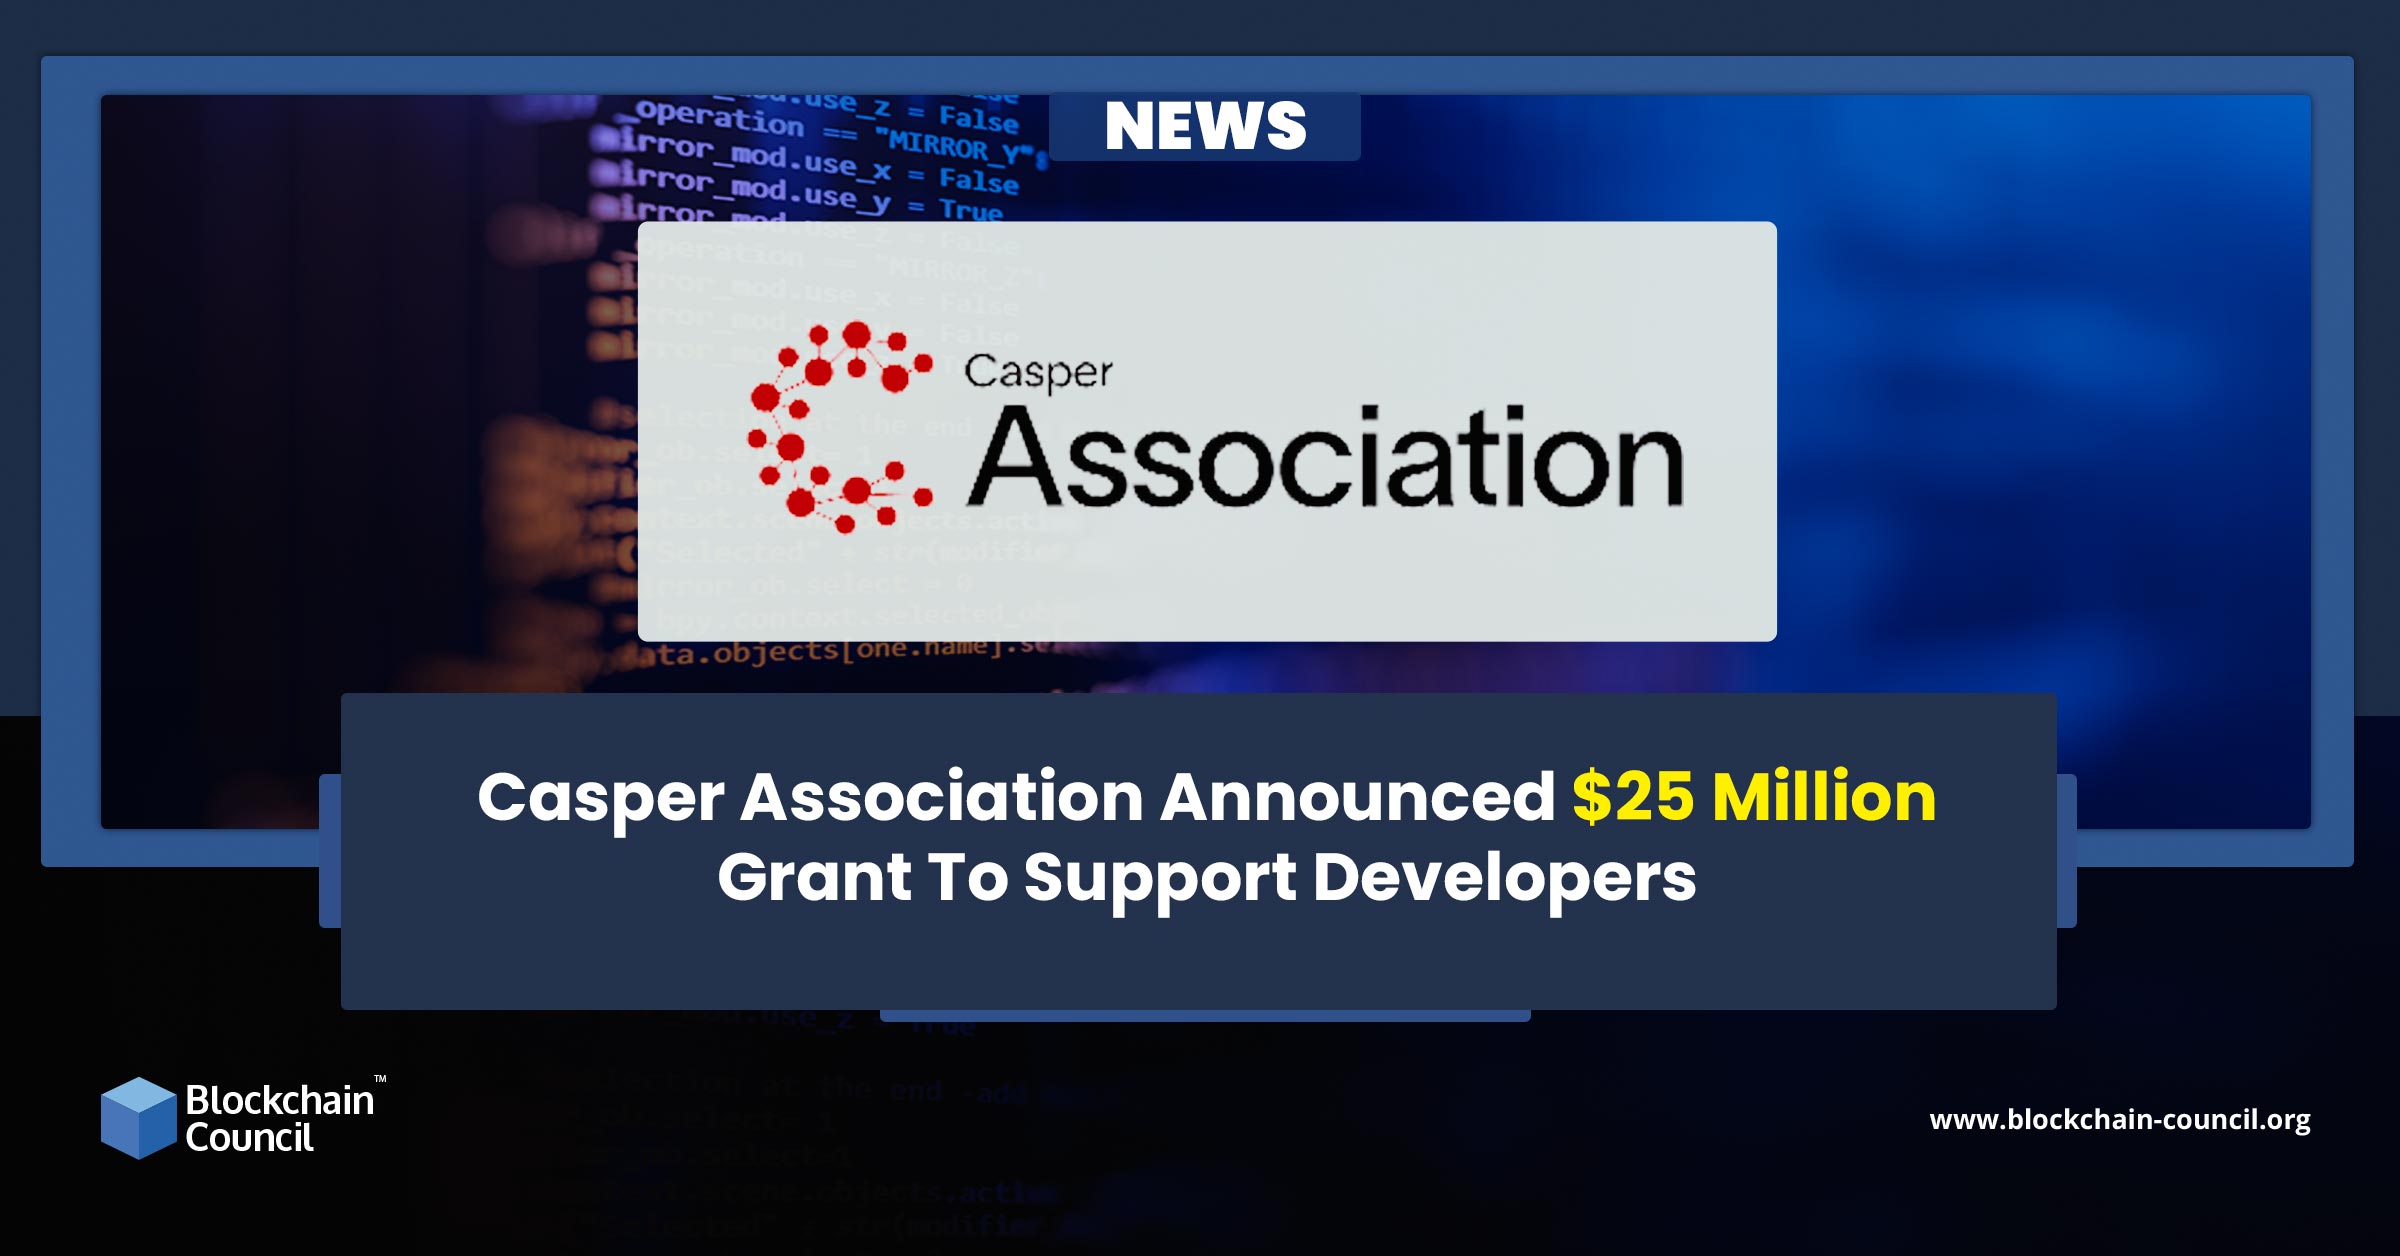 Casper Association Announced $25 Million Grant To Support Developers